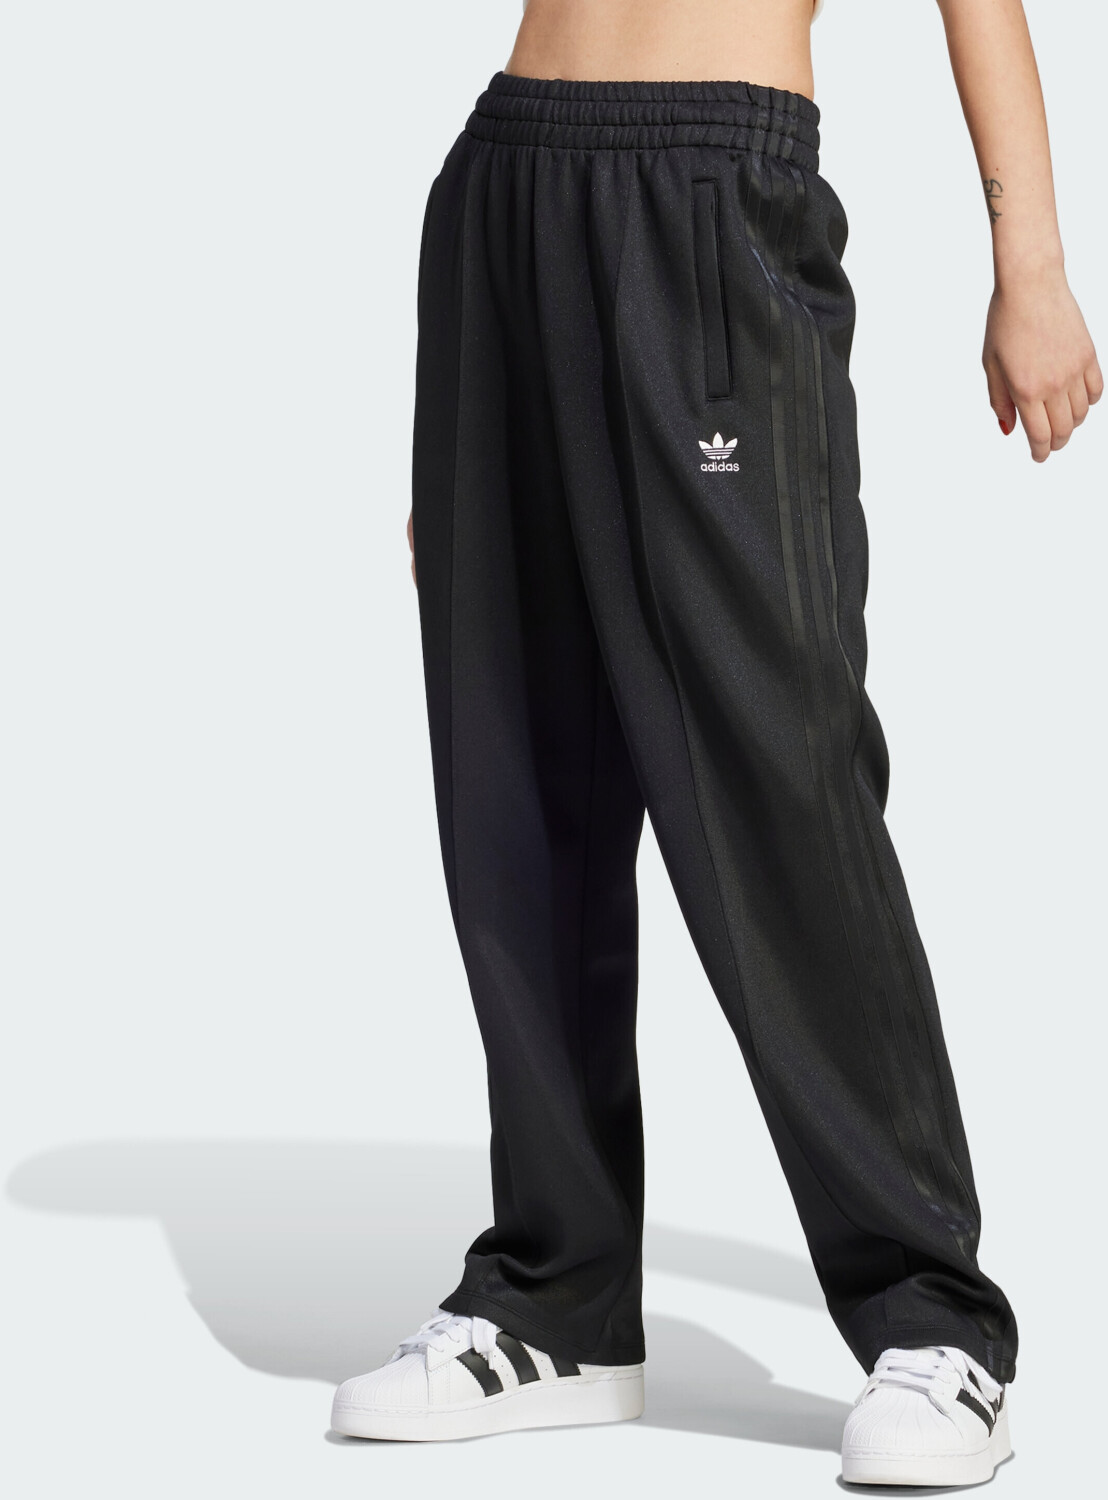 Adidas Woman adicolor Classics Oversized 44,99 ab black € | Pants Preisvergleich (IK6505) SST Training bei